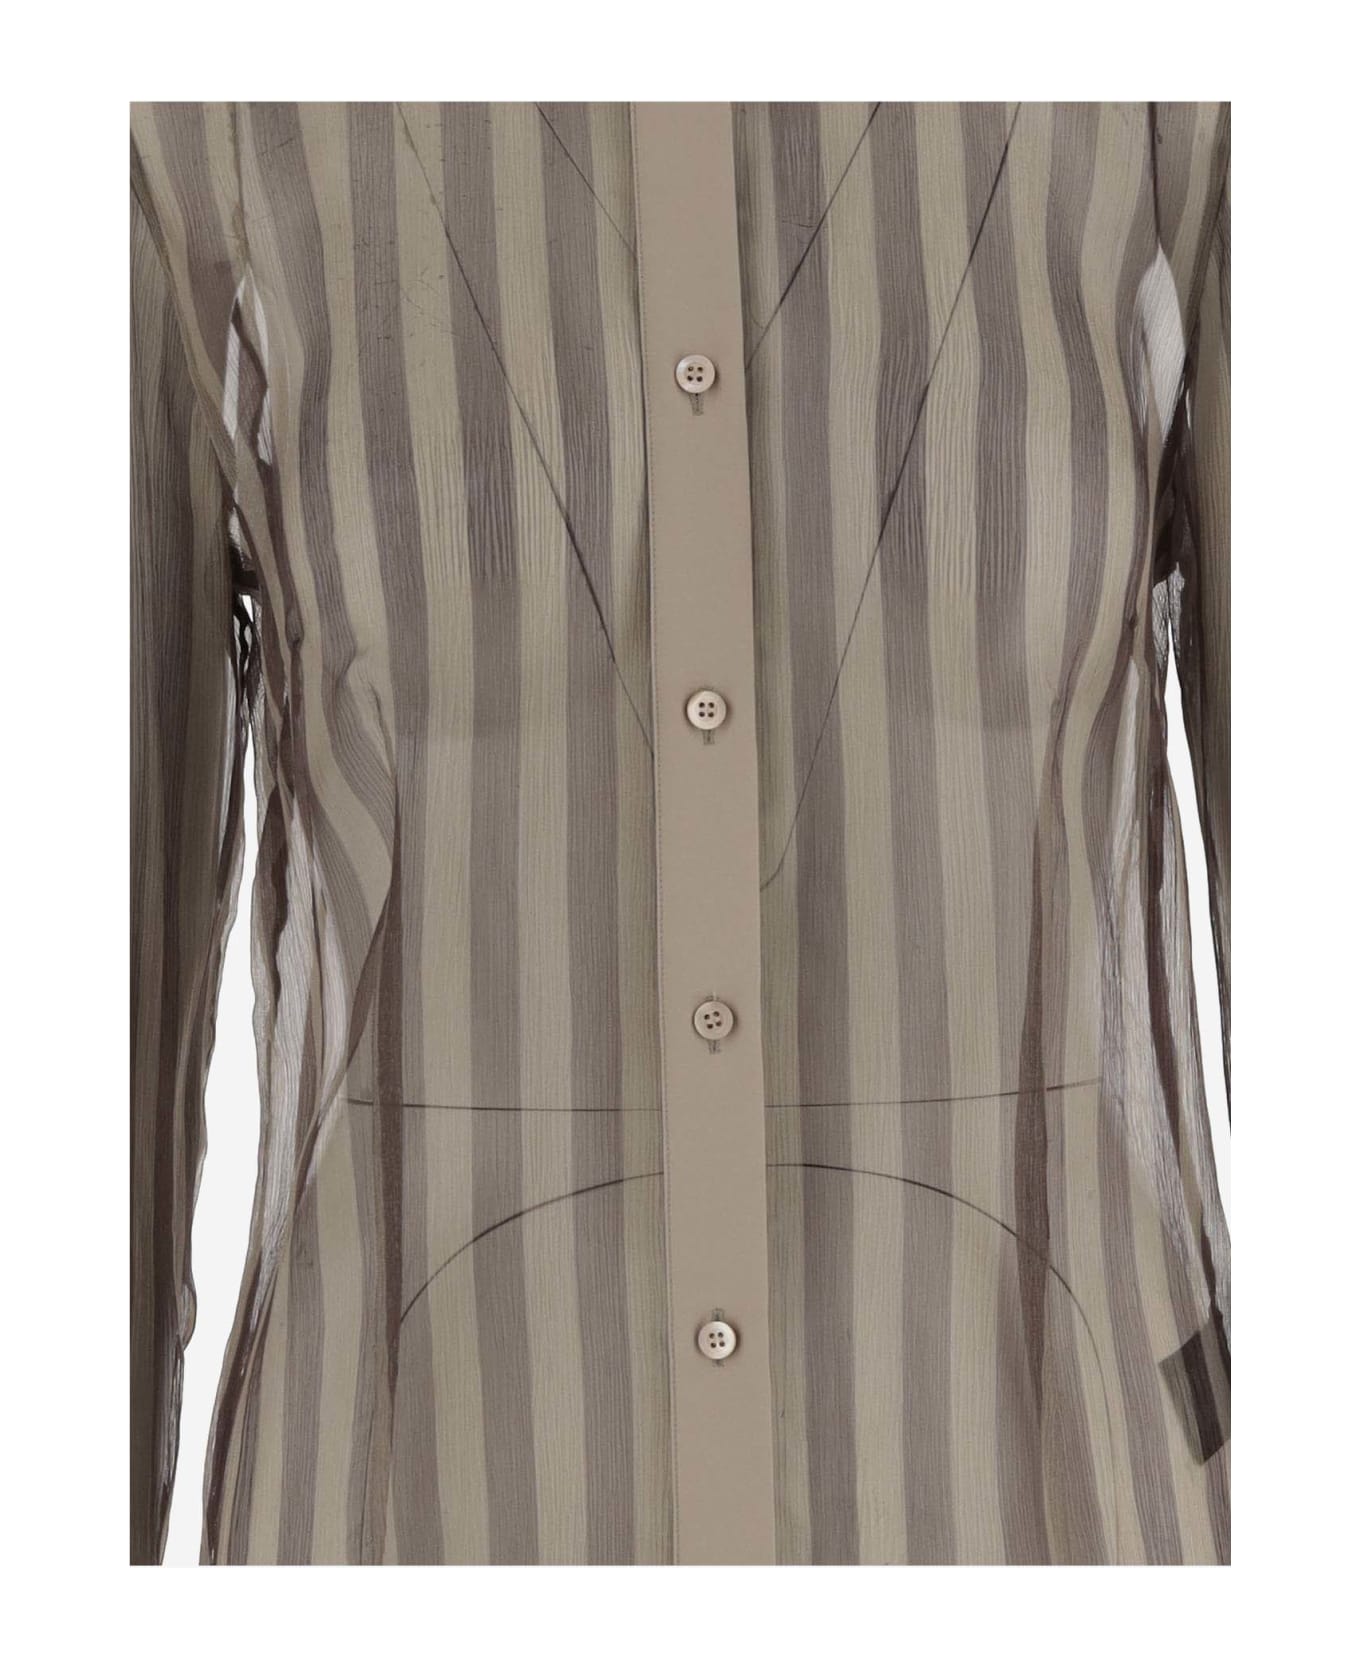 Dries Van Noten Cotton And Silk Shirt With Striped Pattern - Brown